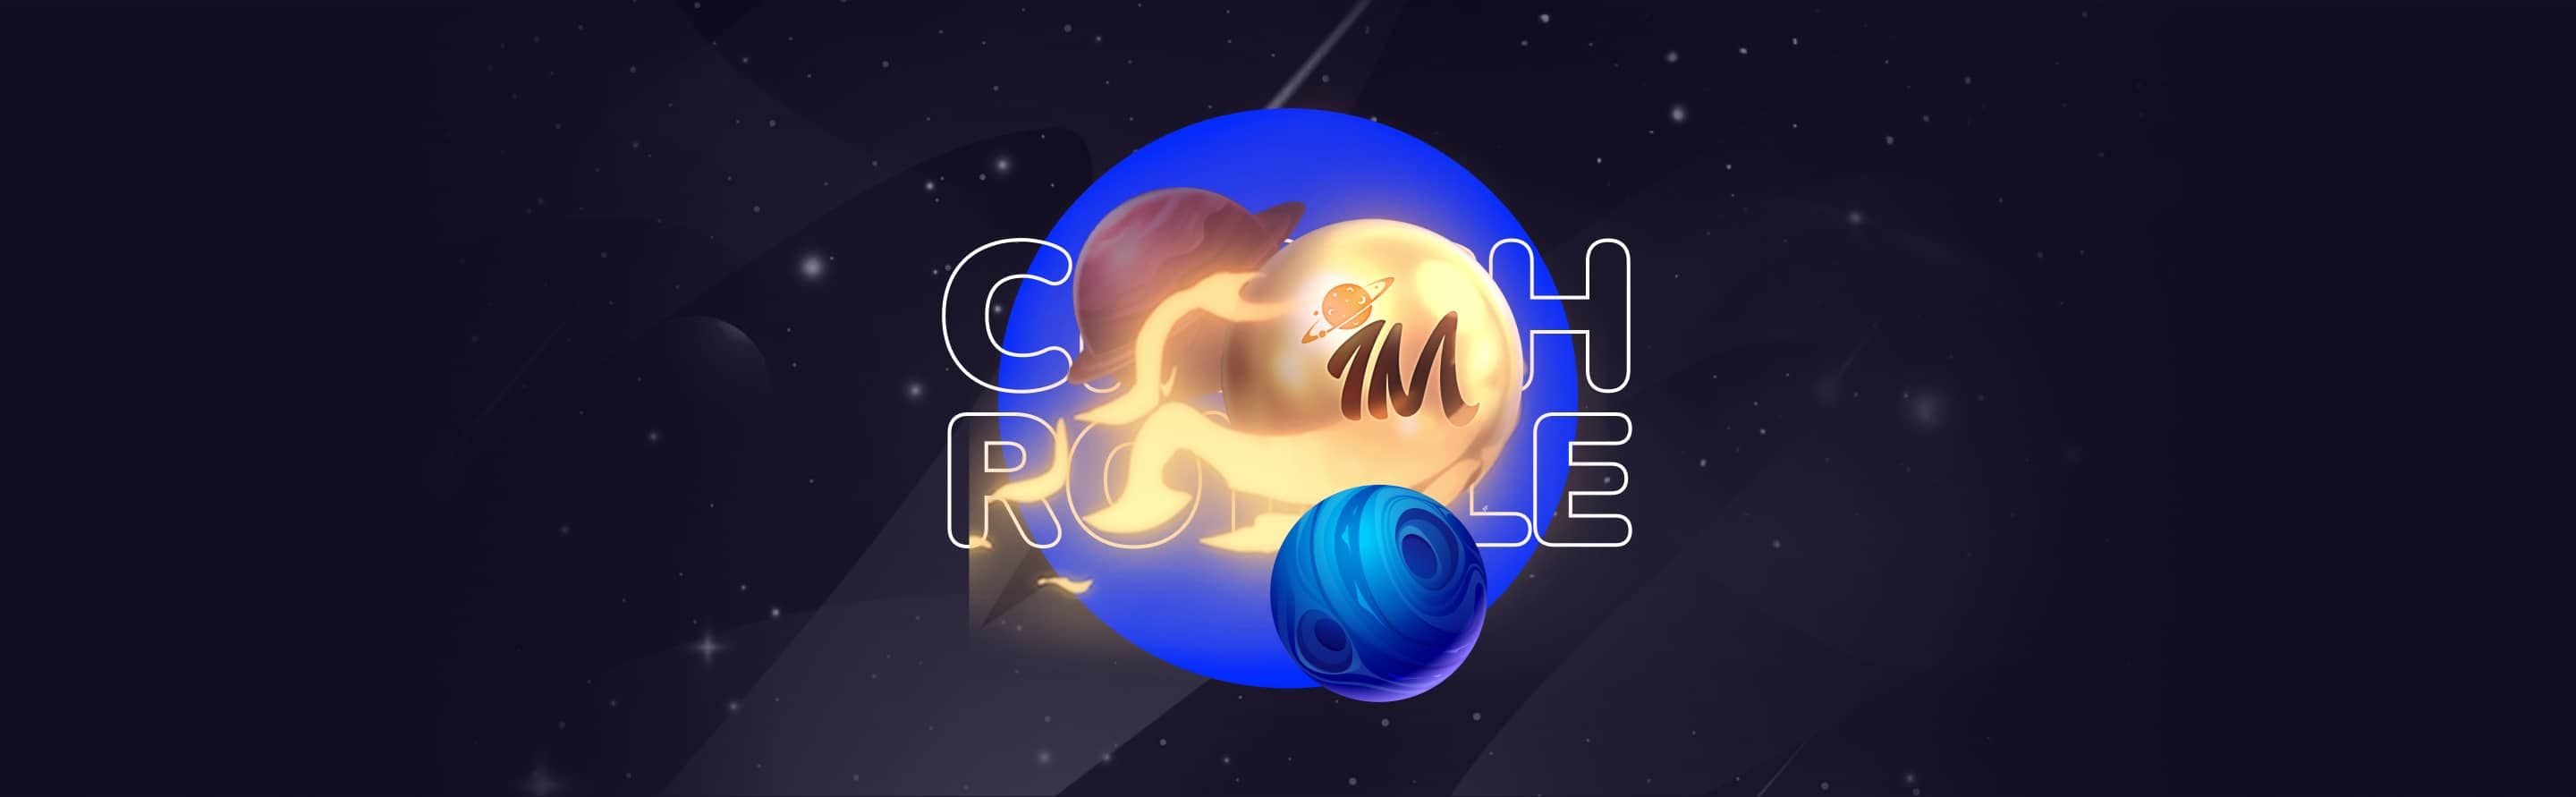 Crash Royale | Gameplay Banner